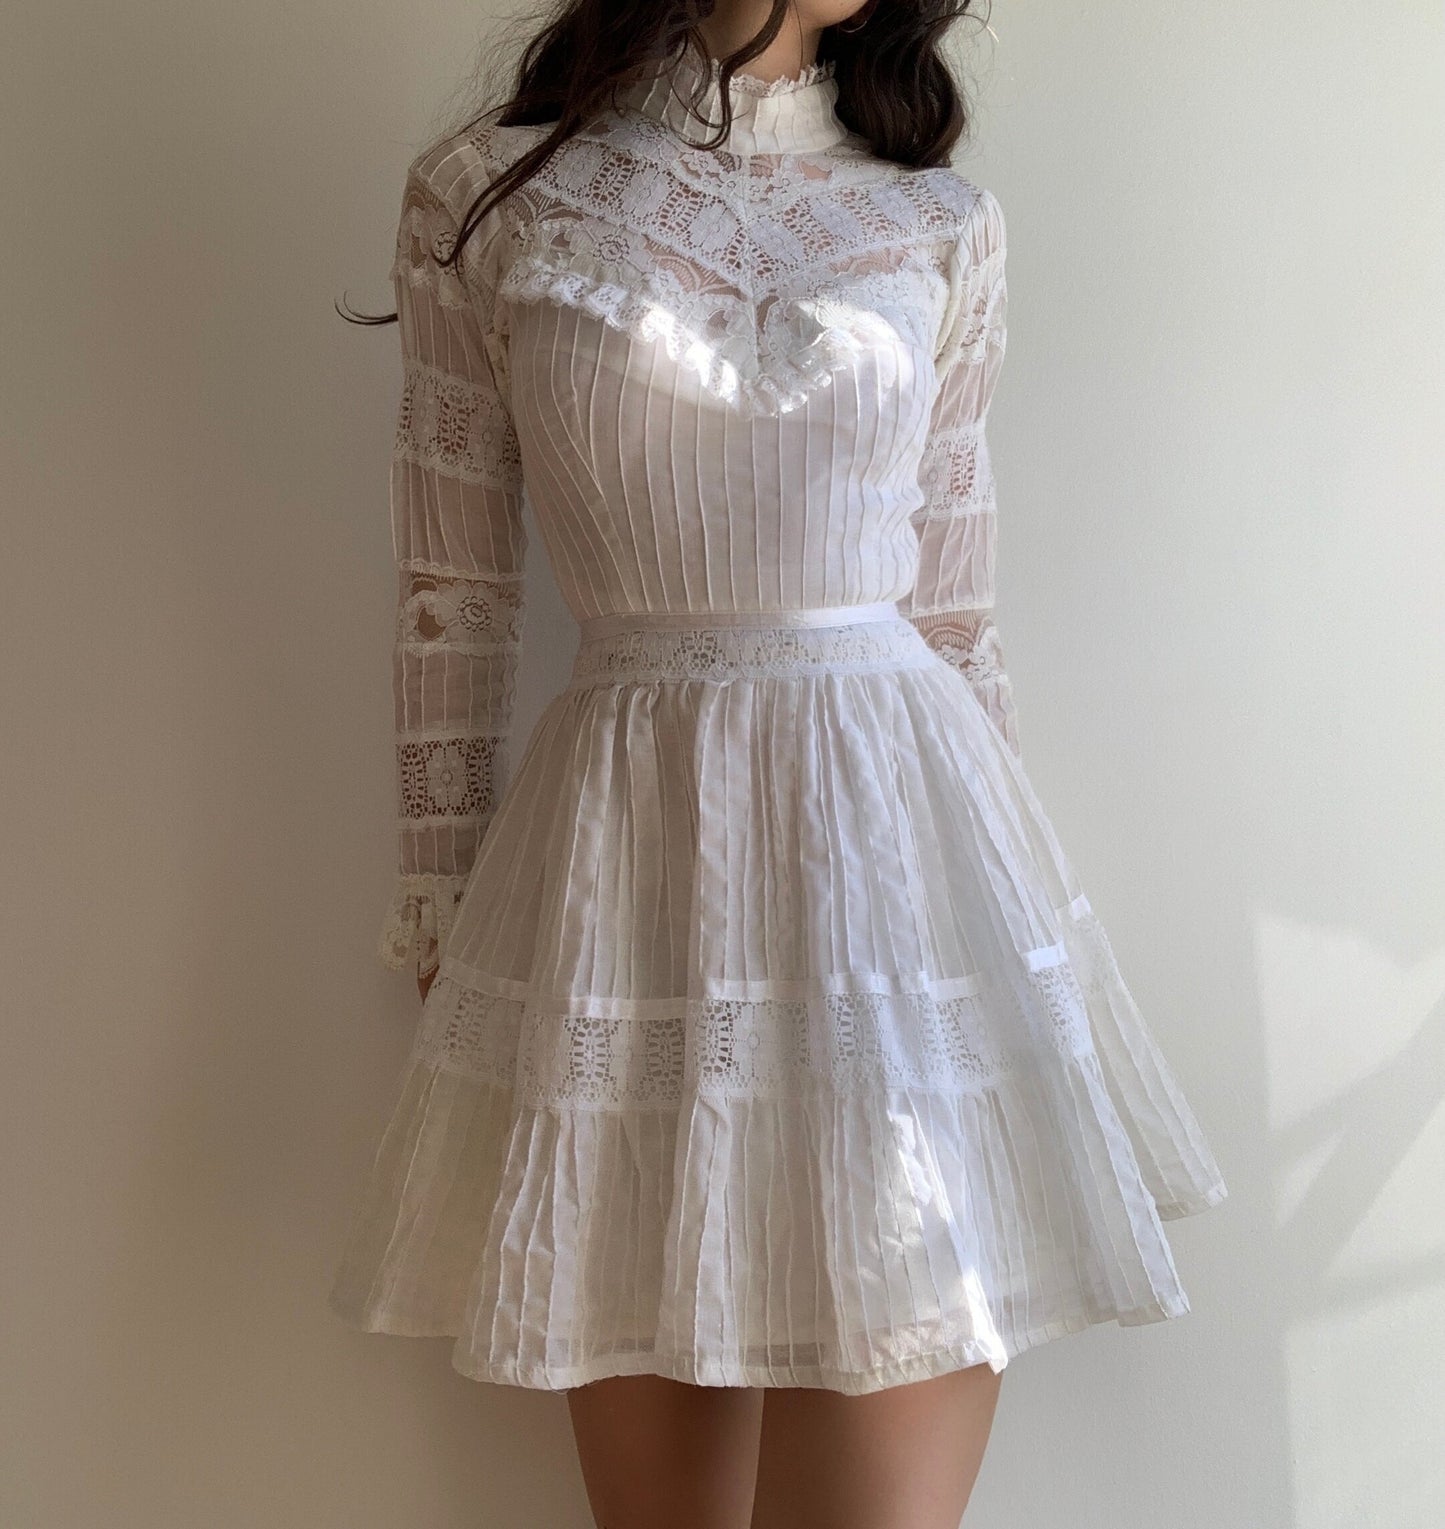 70s Lace Mini Dress (XS/S)